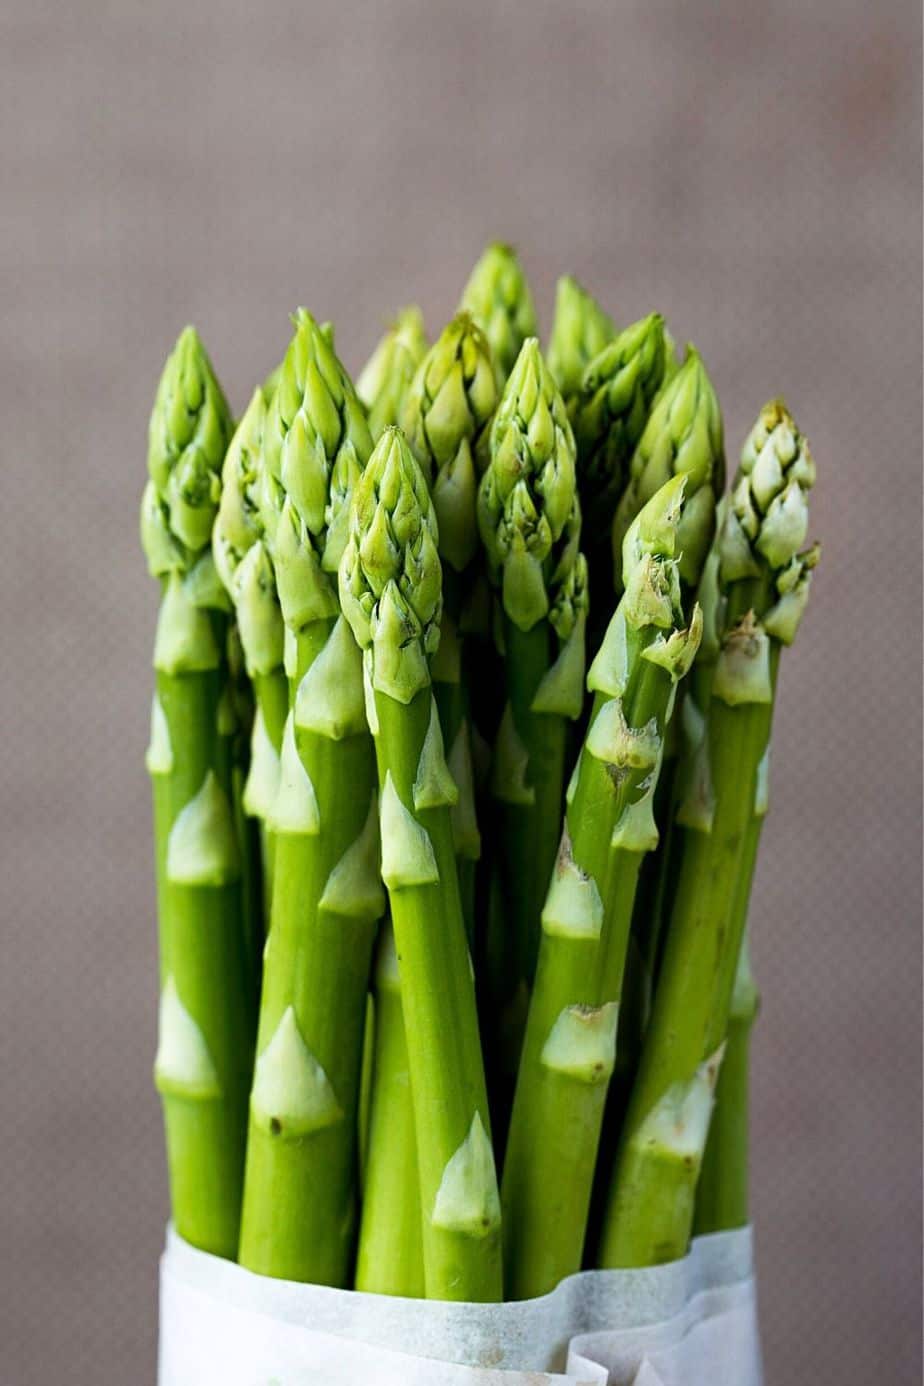 Asparagus grows well in raised beds that has moist, fertile soil